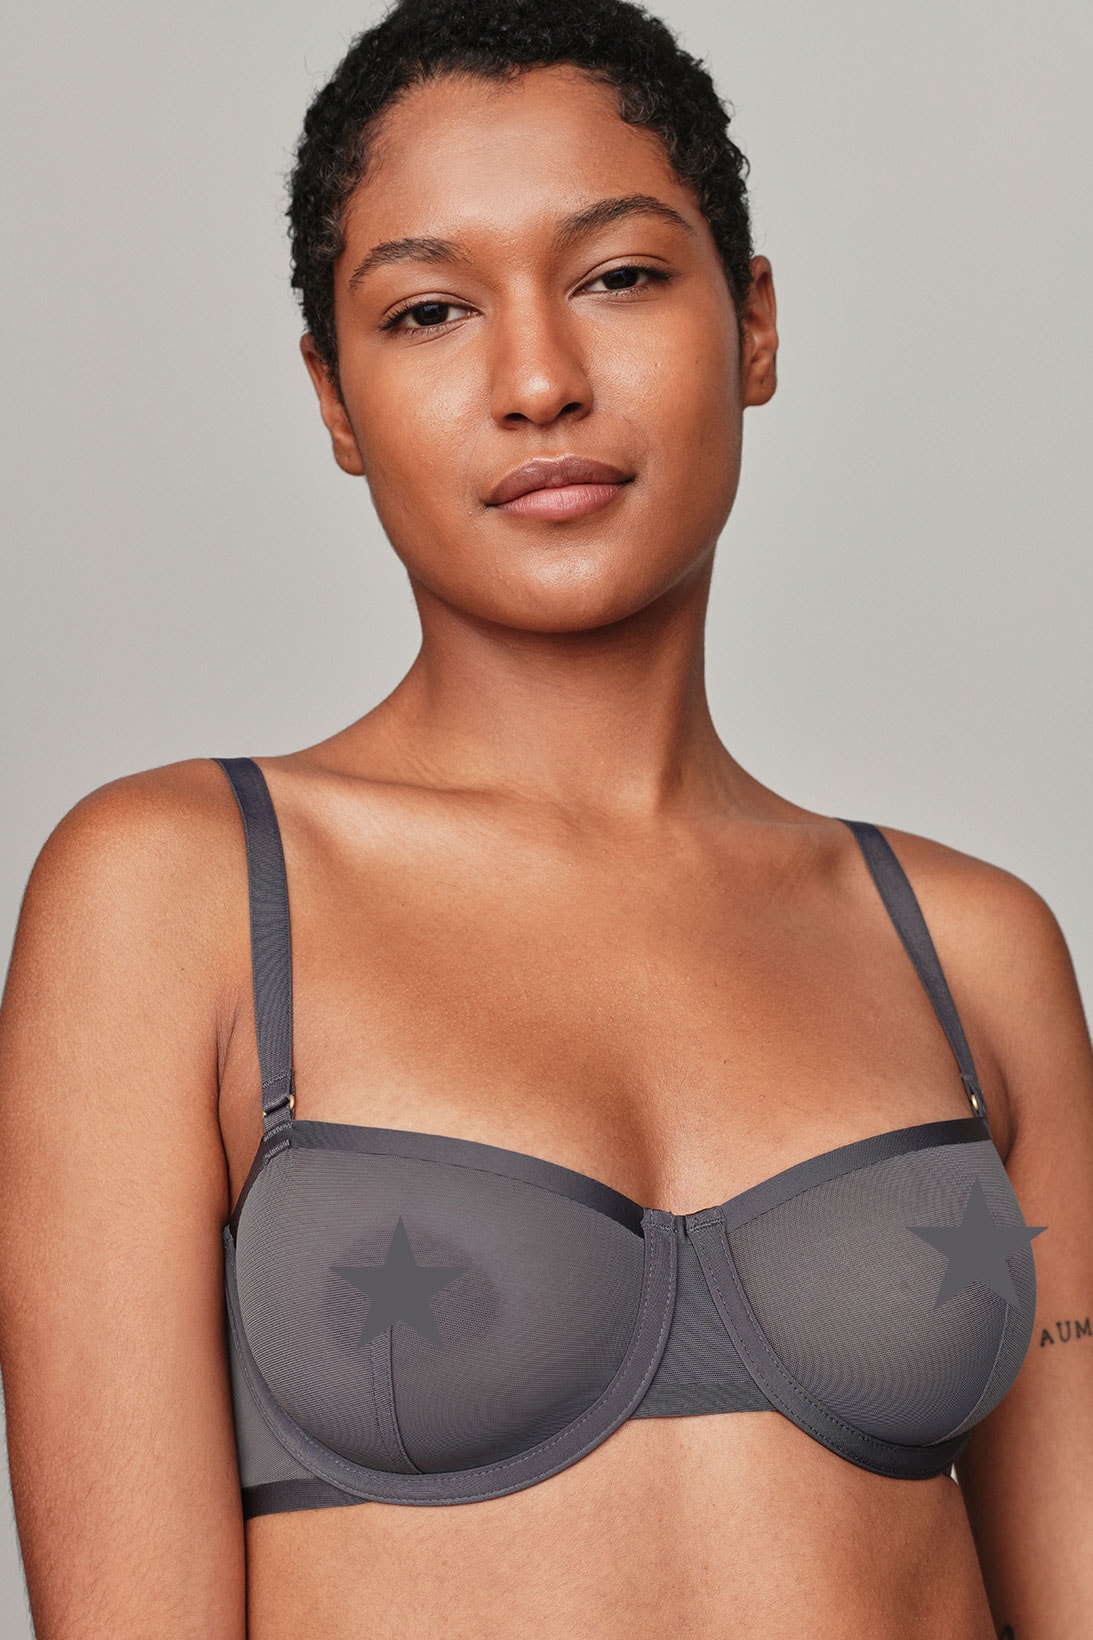 cuup lingerie underwear alma thomas art-inspired capsule gray slate sheer bra